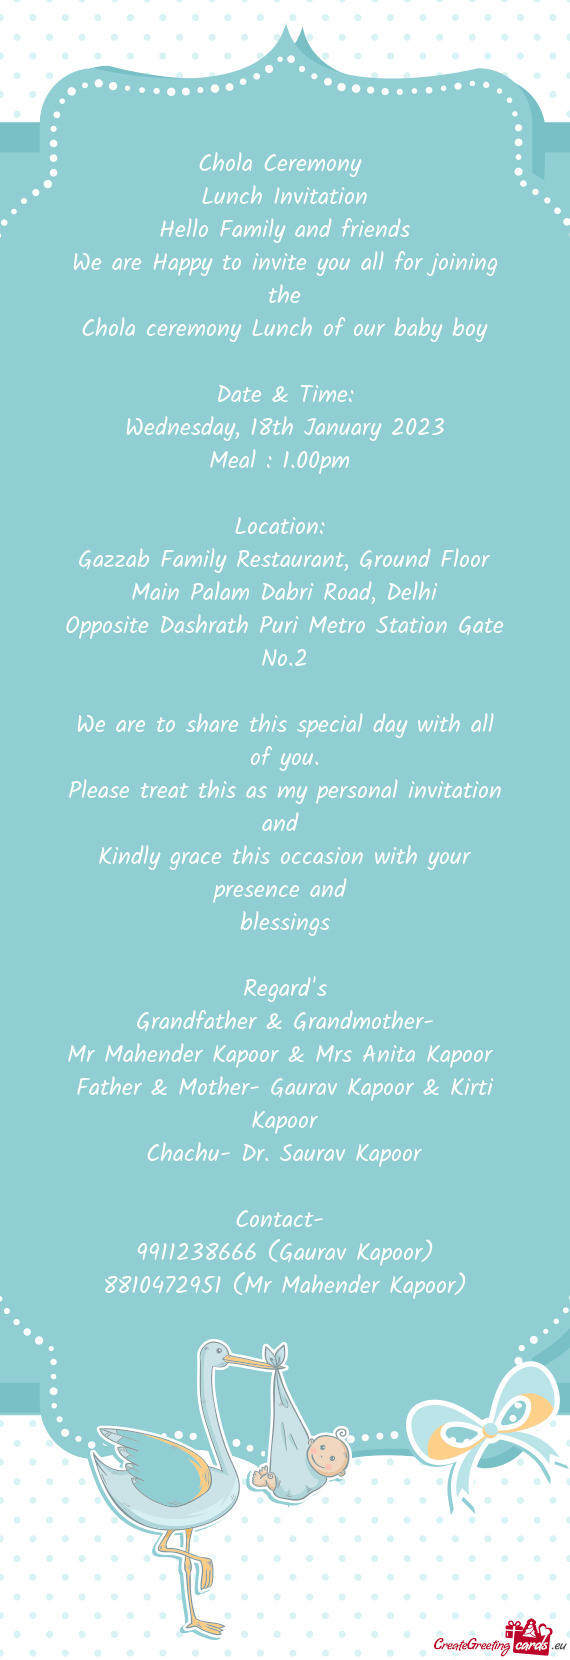 Gazzab Family Restaurant, Ground Floor